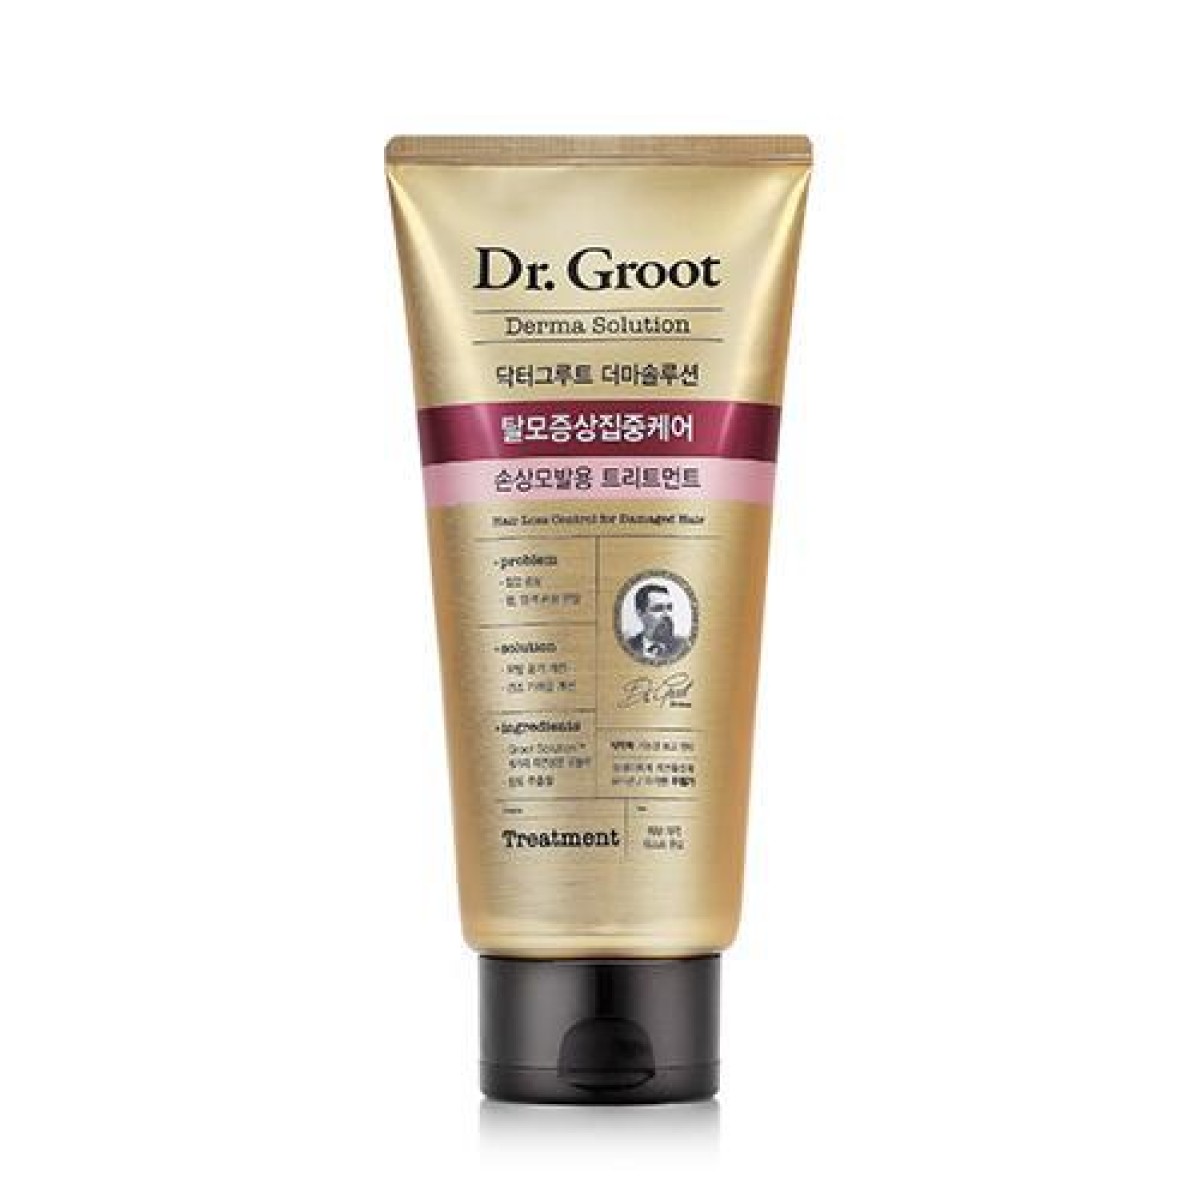 Dr. Groot Anti-Hair Loss Treatment for Damaged Hair (300ml)